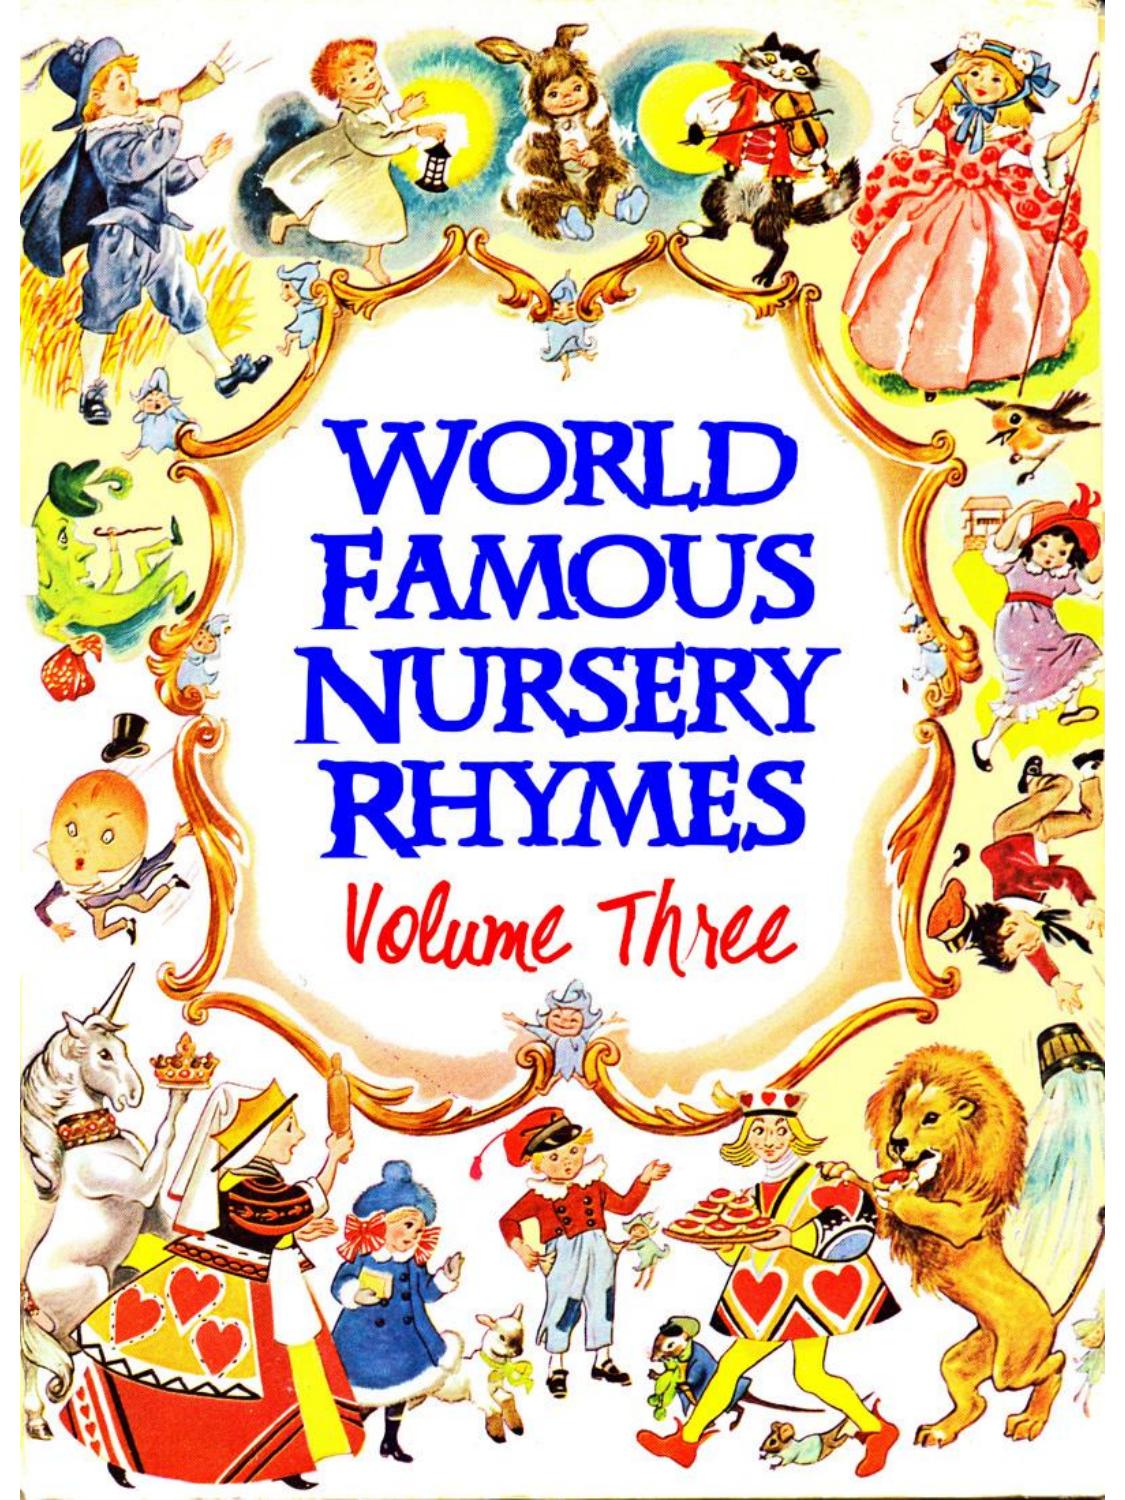 World Famous Nursery Rhymes Volume Three